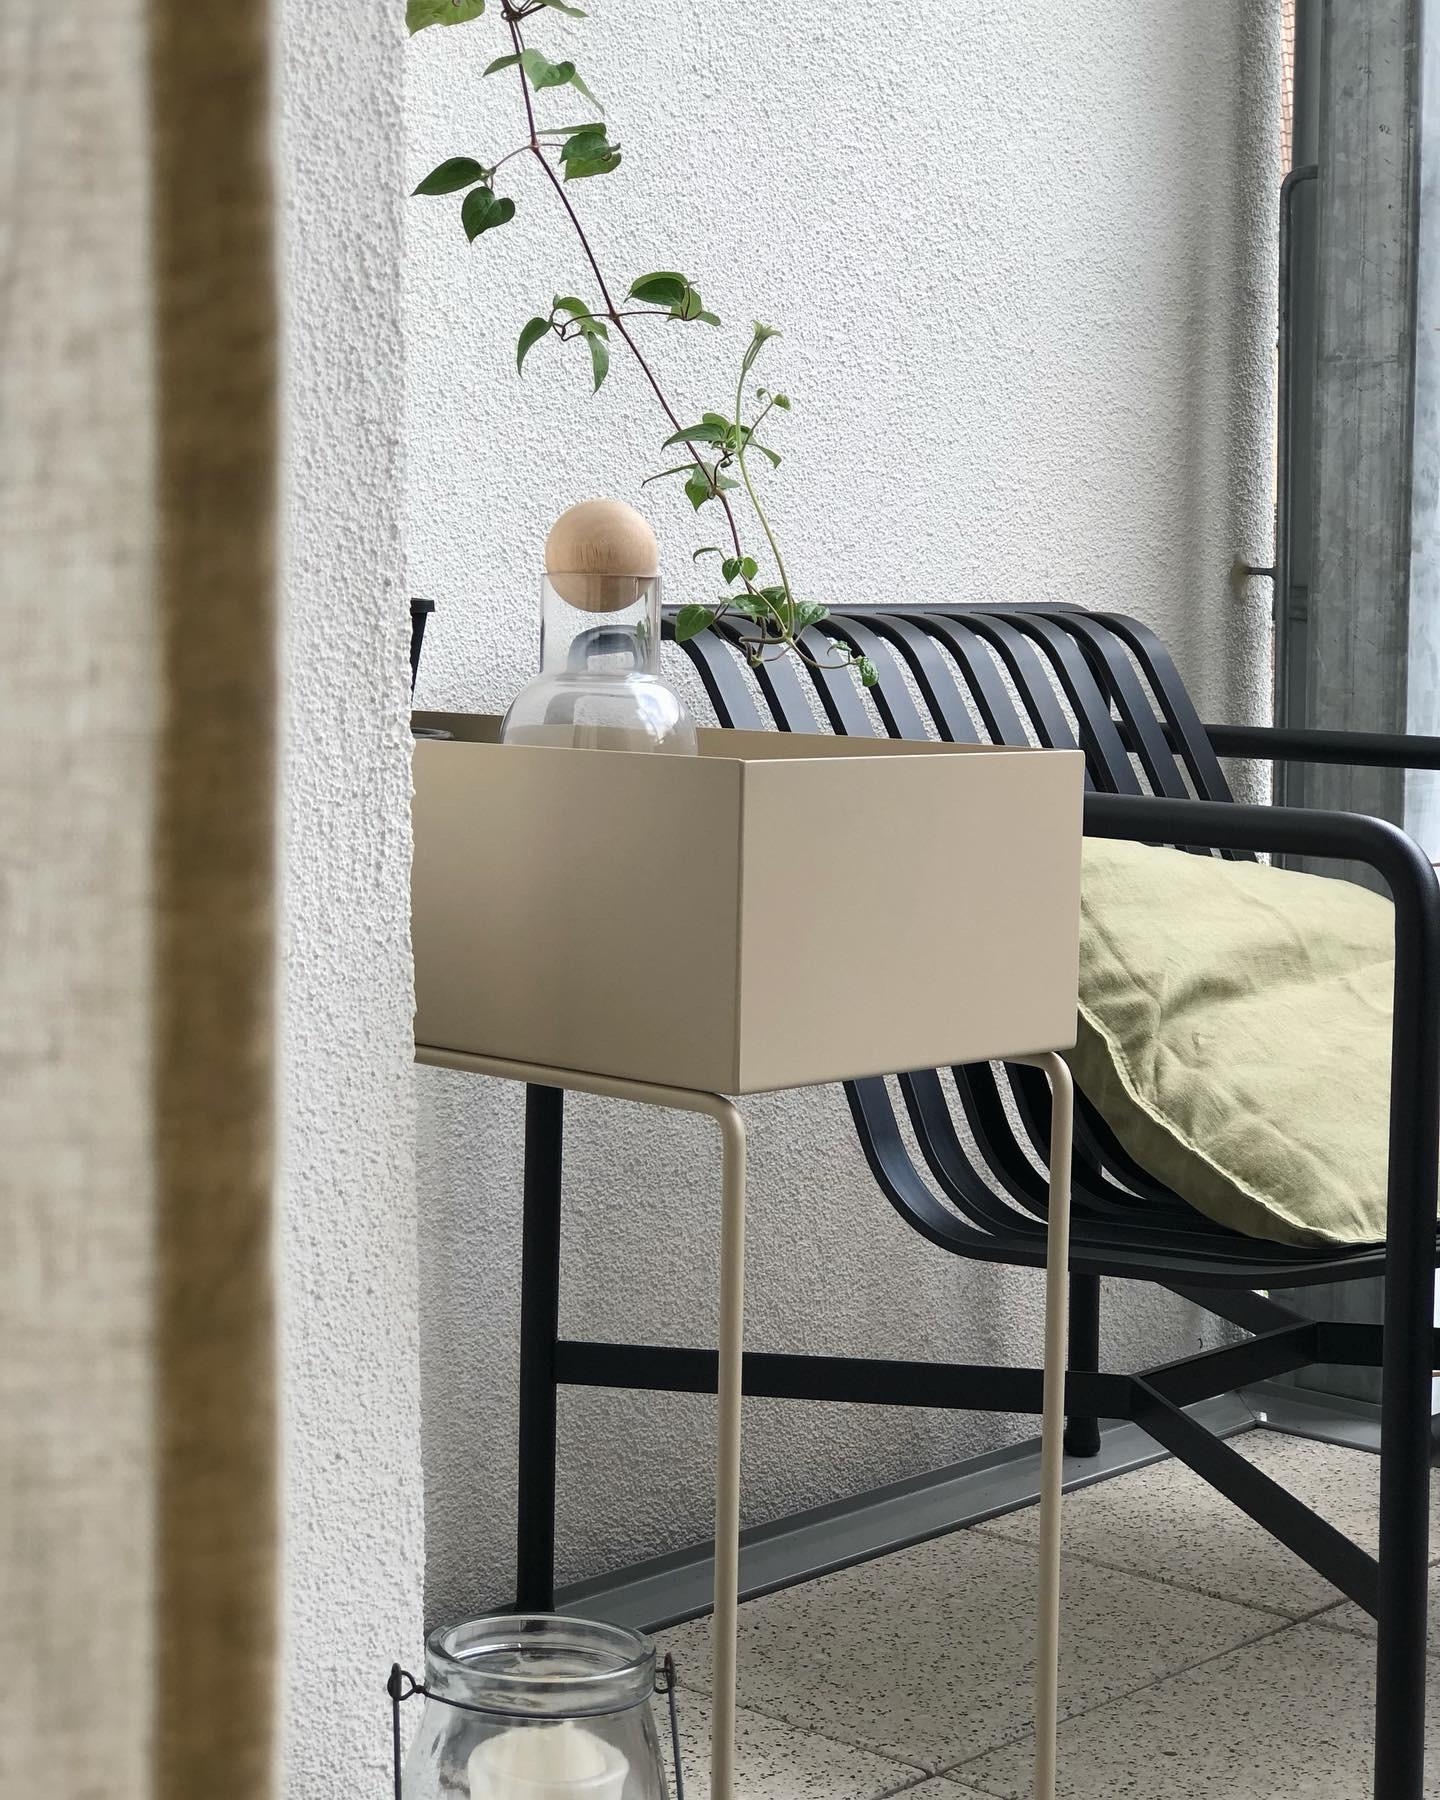 #balkon #balkoninspo #balcony #outdoor #balkondeko #skandinavisch #plantbox #couchstyle #interior #minimalistisch #beige